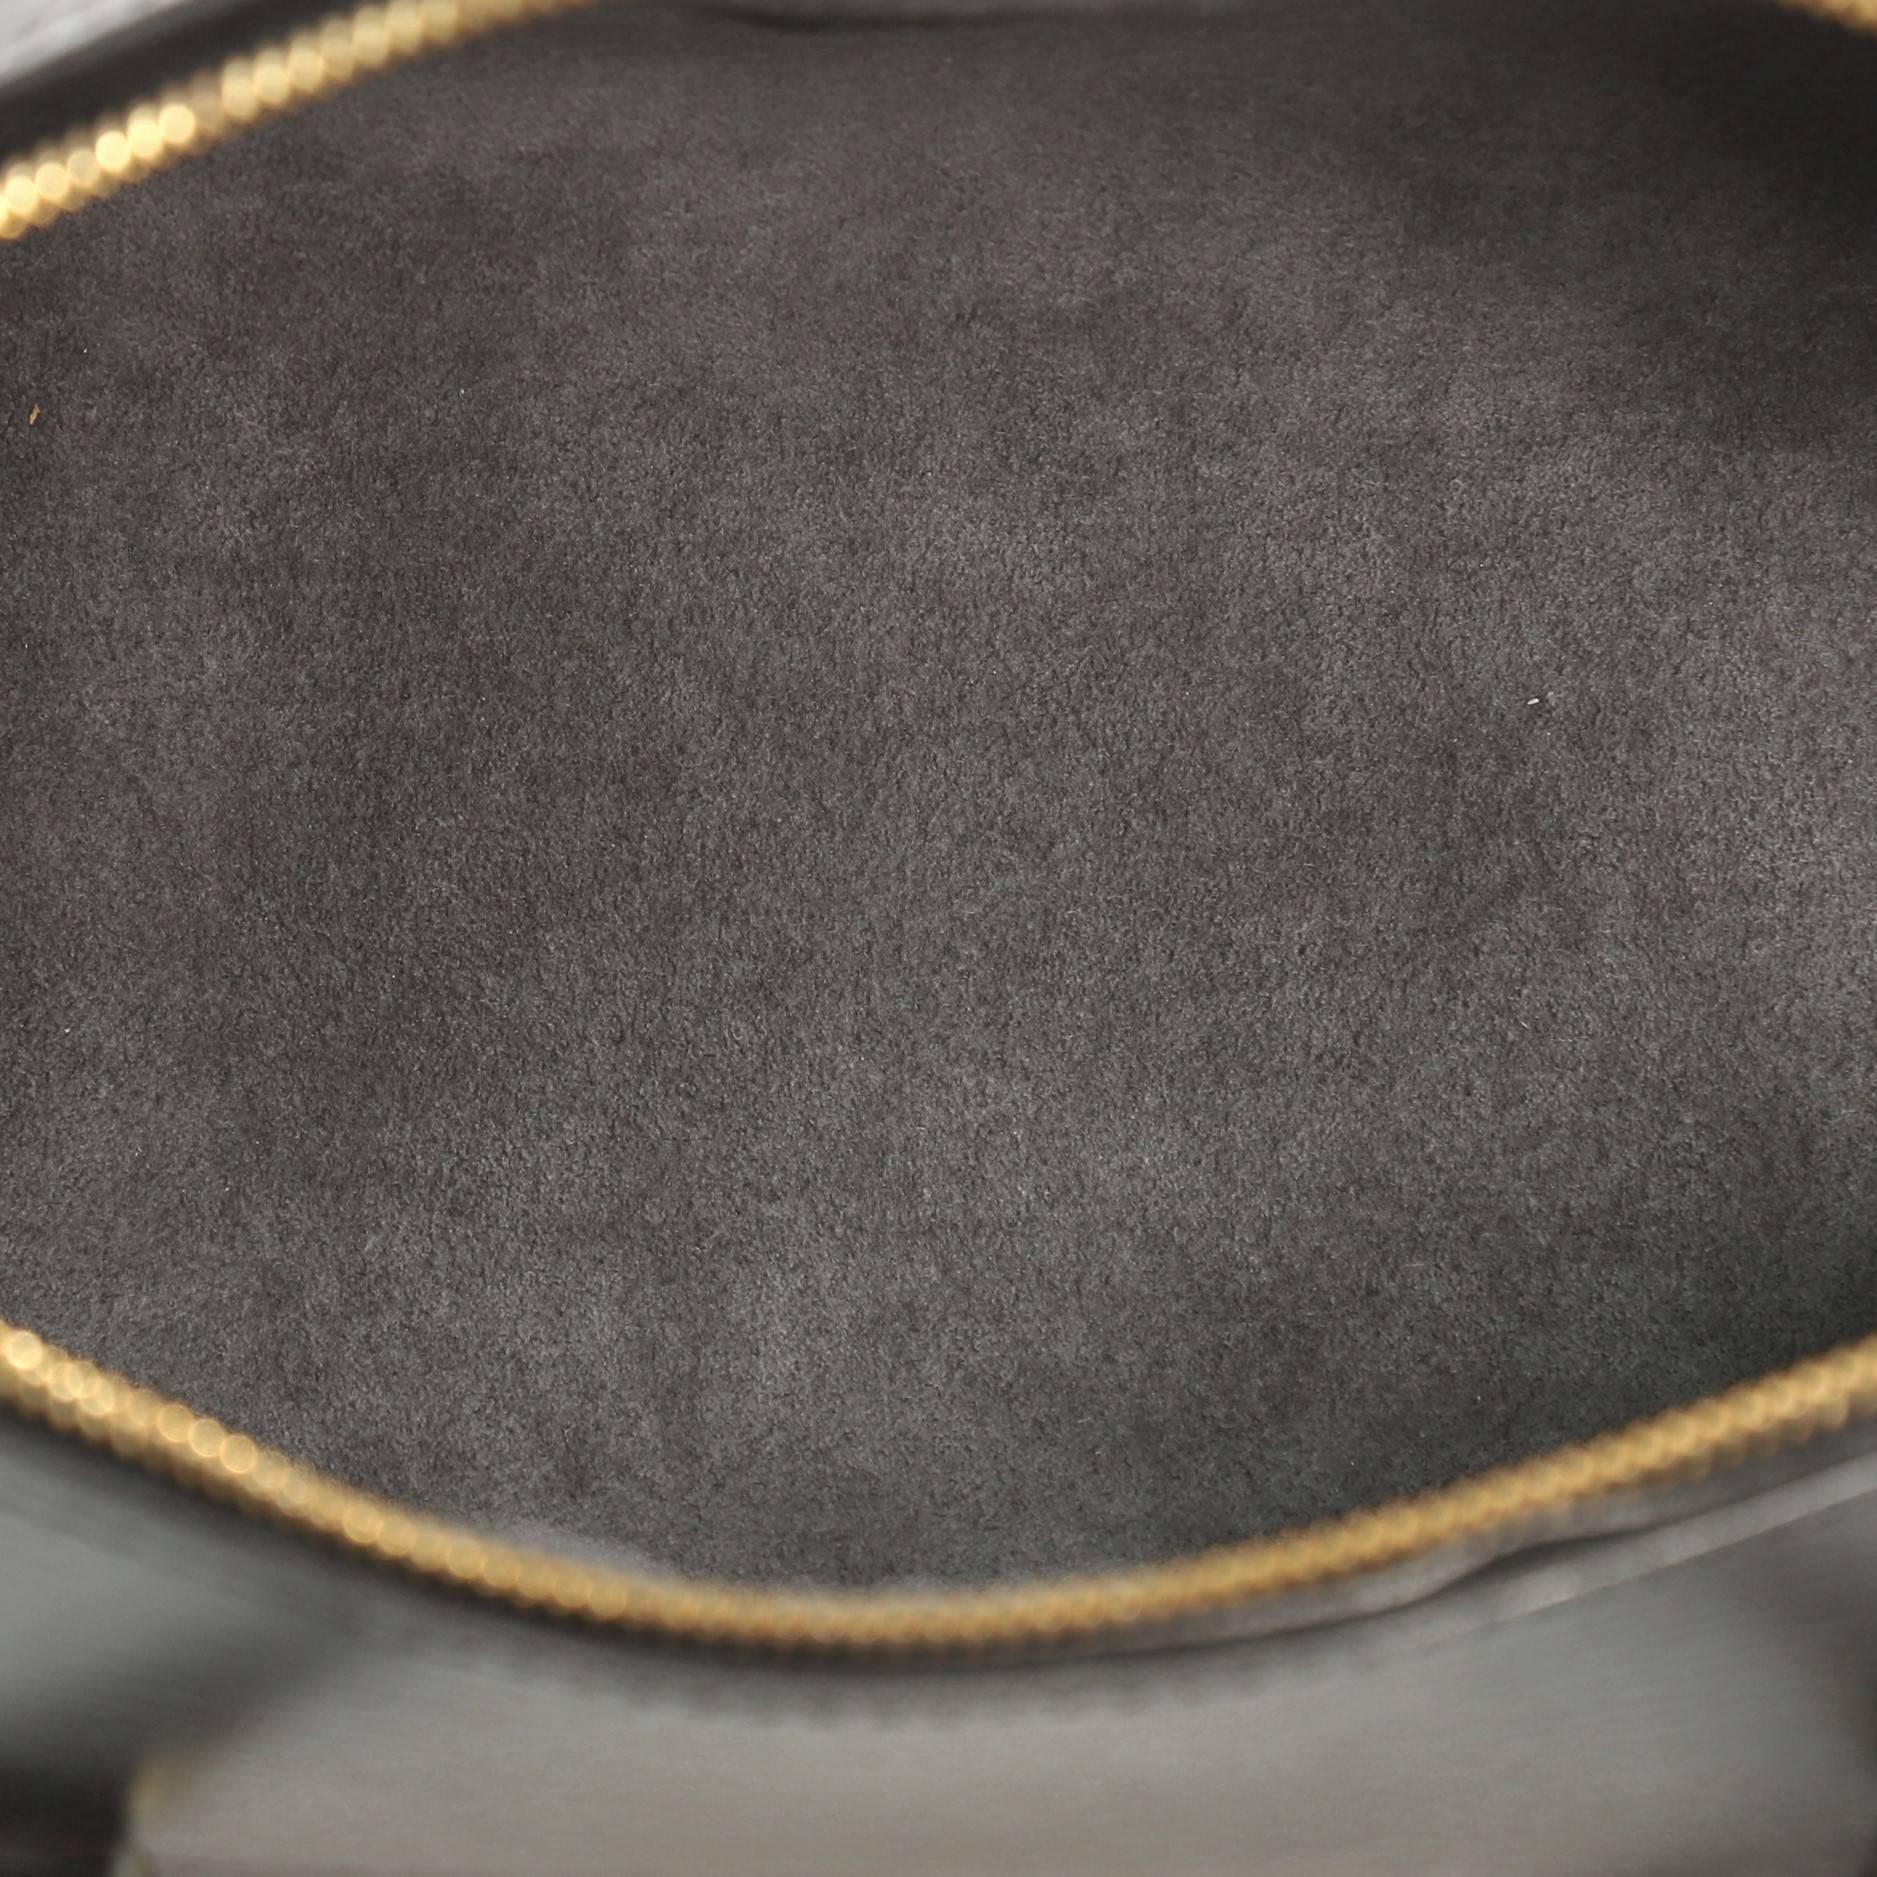 Louis Vuitton Soufflot Handbag Epi Leather 2